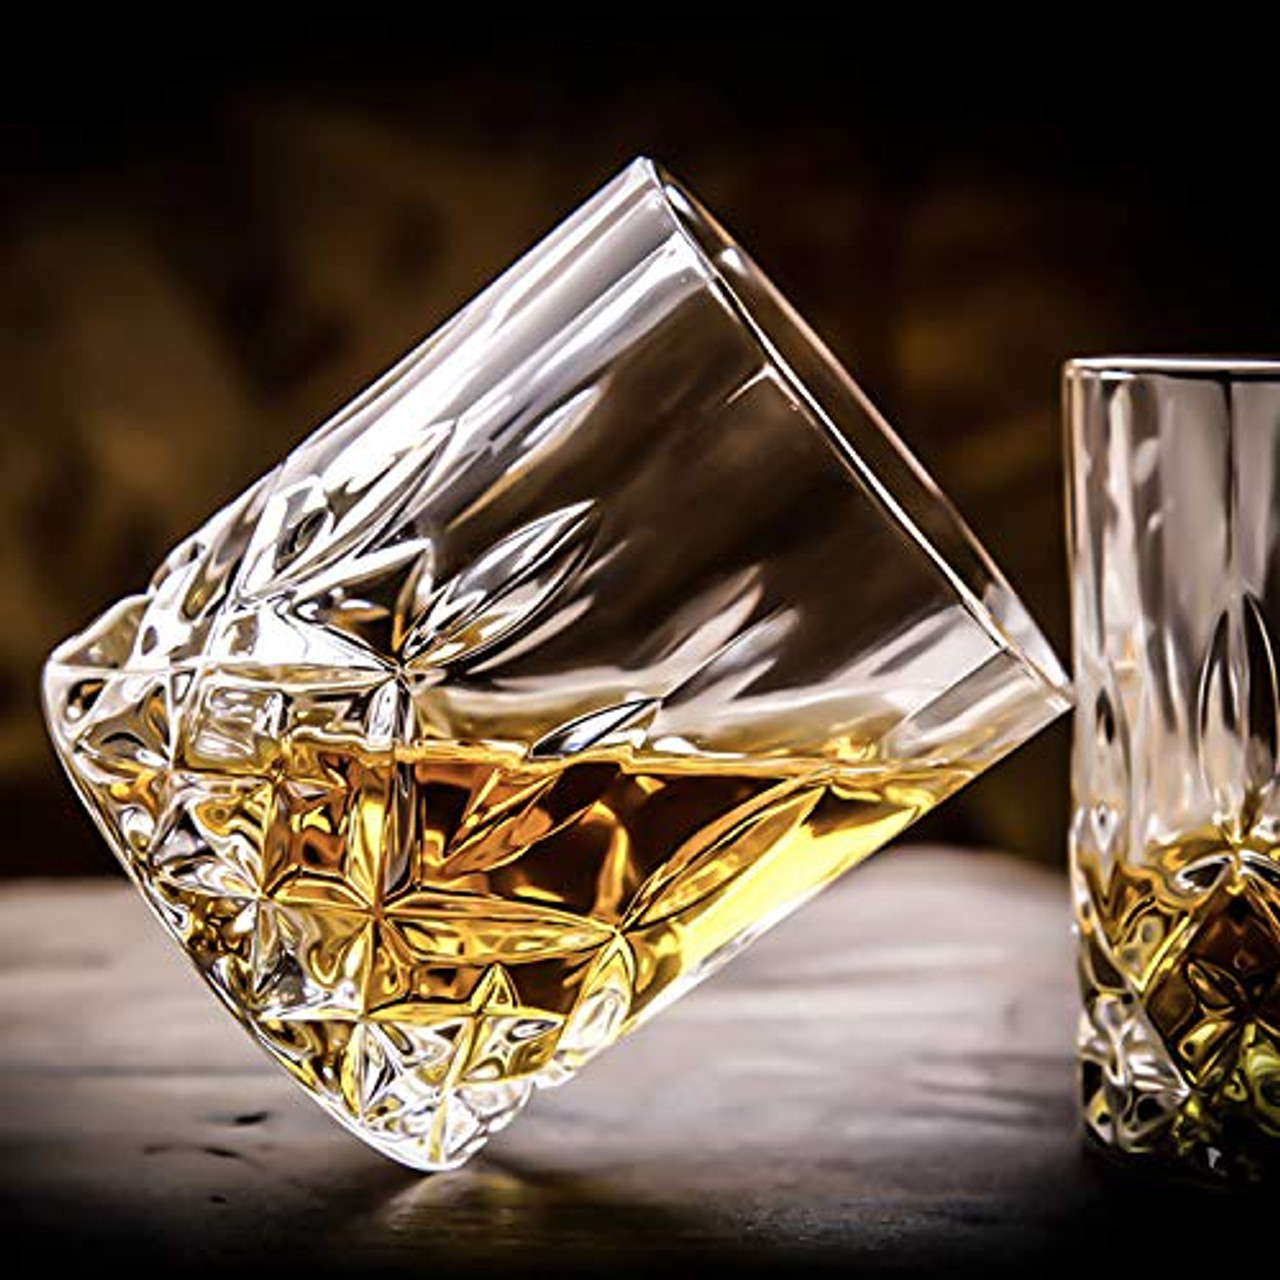 DeeCoo Whiskey Glasses-Premium 10, 11 OZ Scotch Glasses Set of  6 /Old Fashioned Whiskey Glasses/Style Glassware for Bourbon/Rum glasses/Bar  Tumbler Whiskey Glasses(Mixed): Old Fashioned Glasses